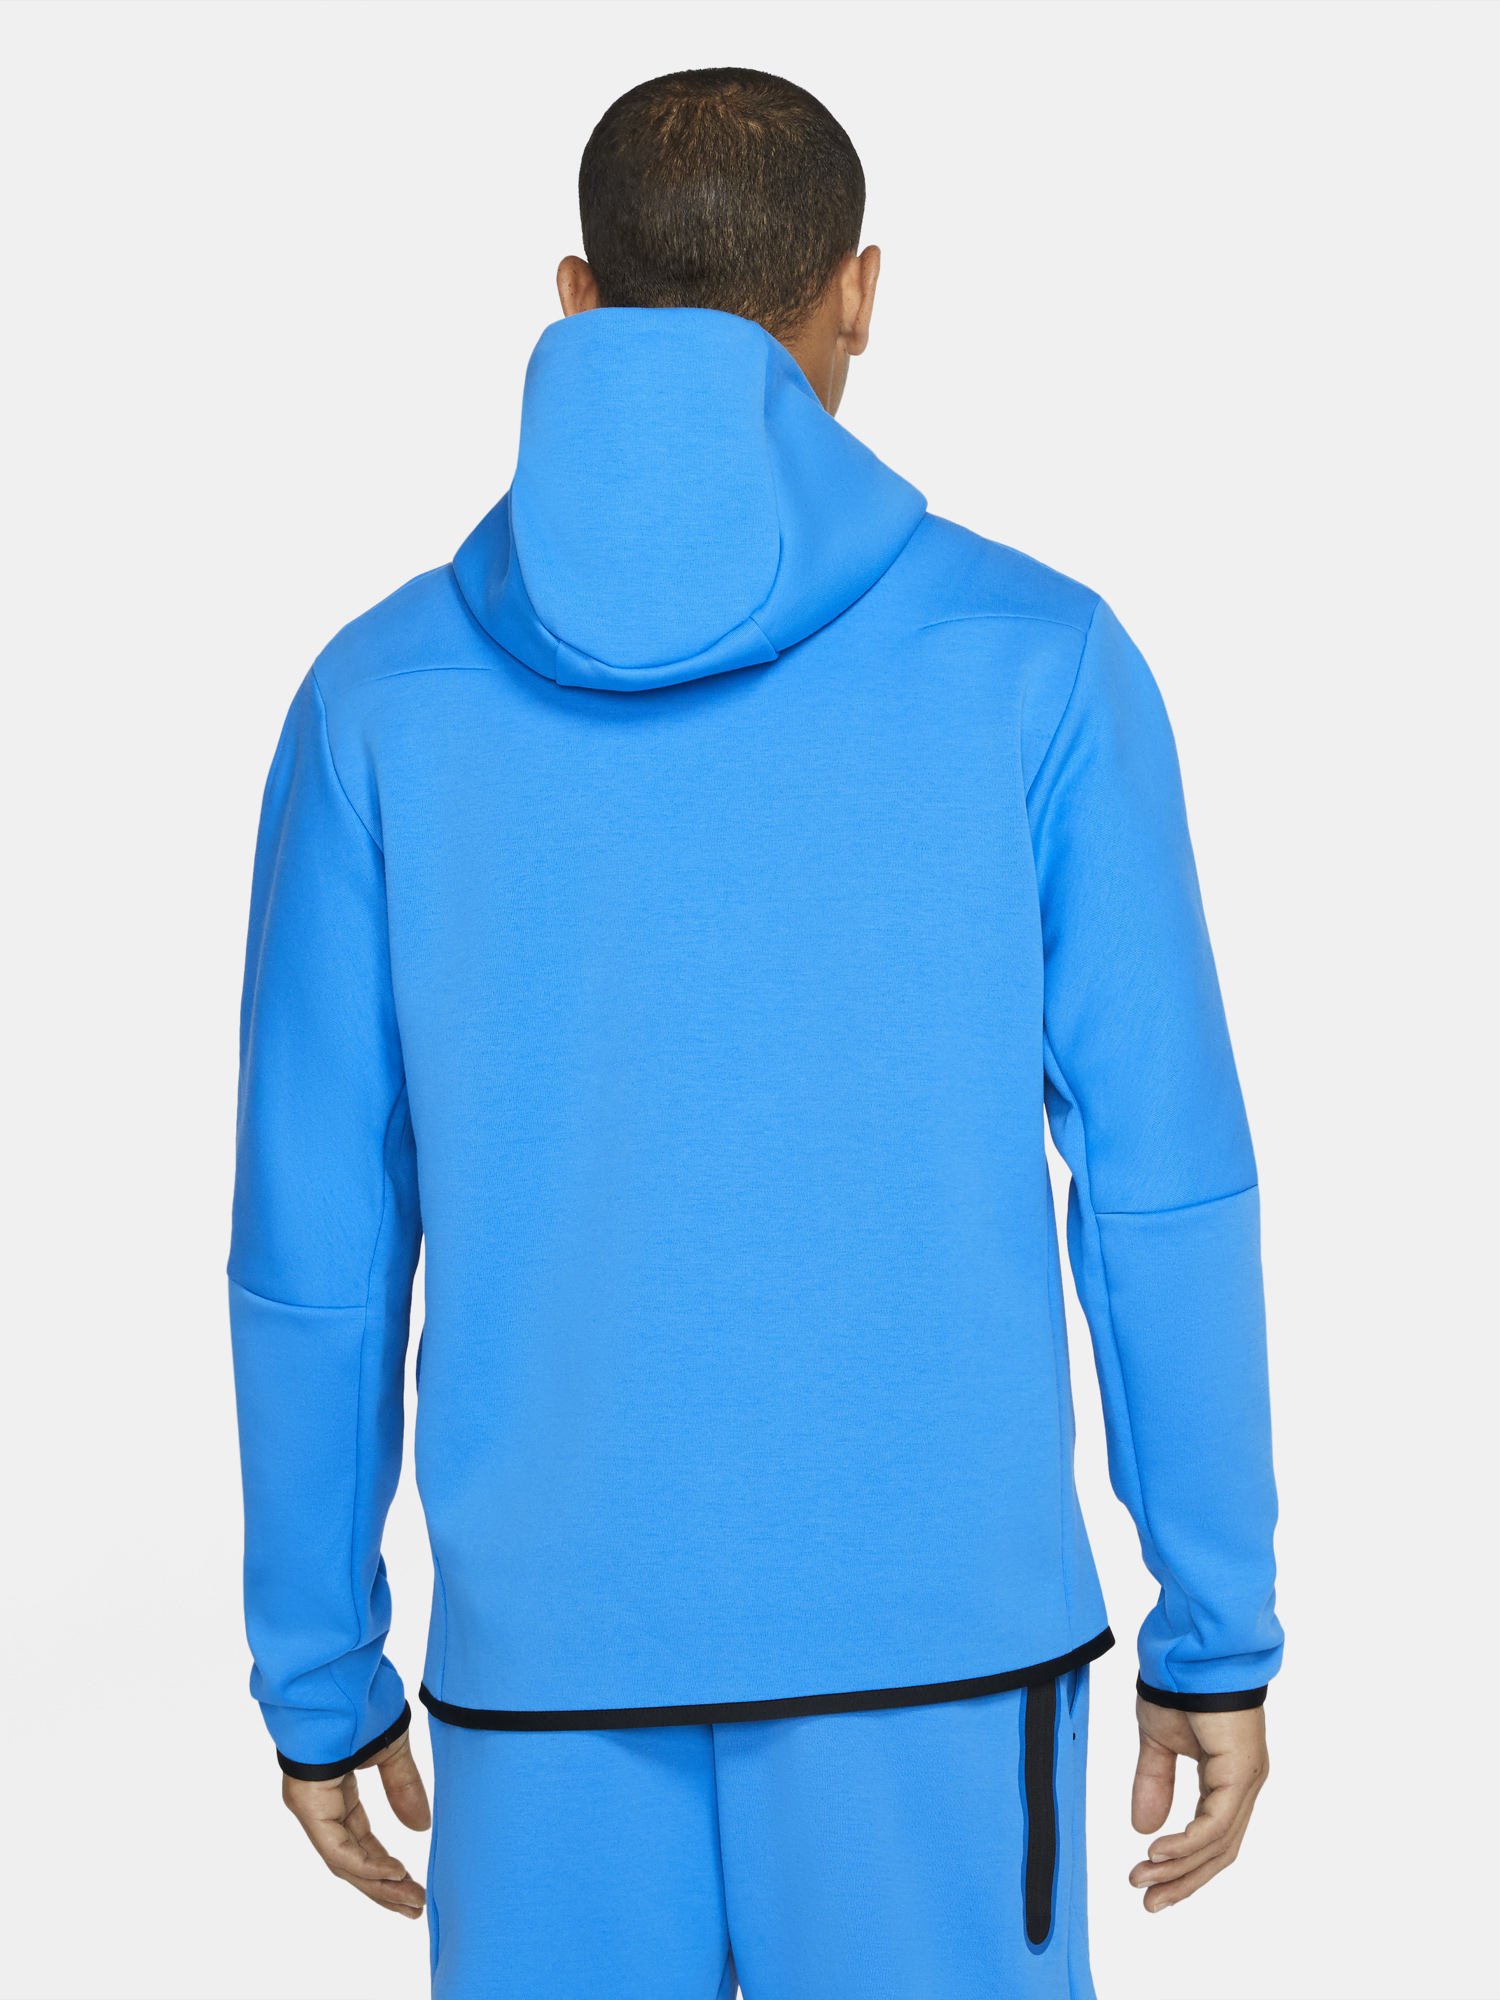 Nike Tech Fleece Hoodie and Pants in Light Photo Blue Black